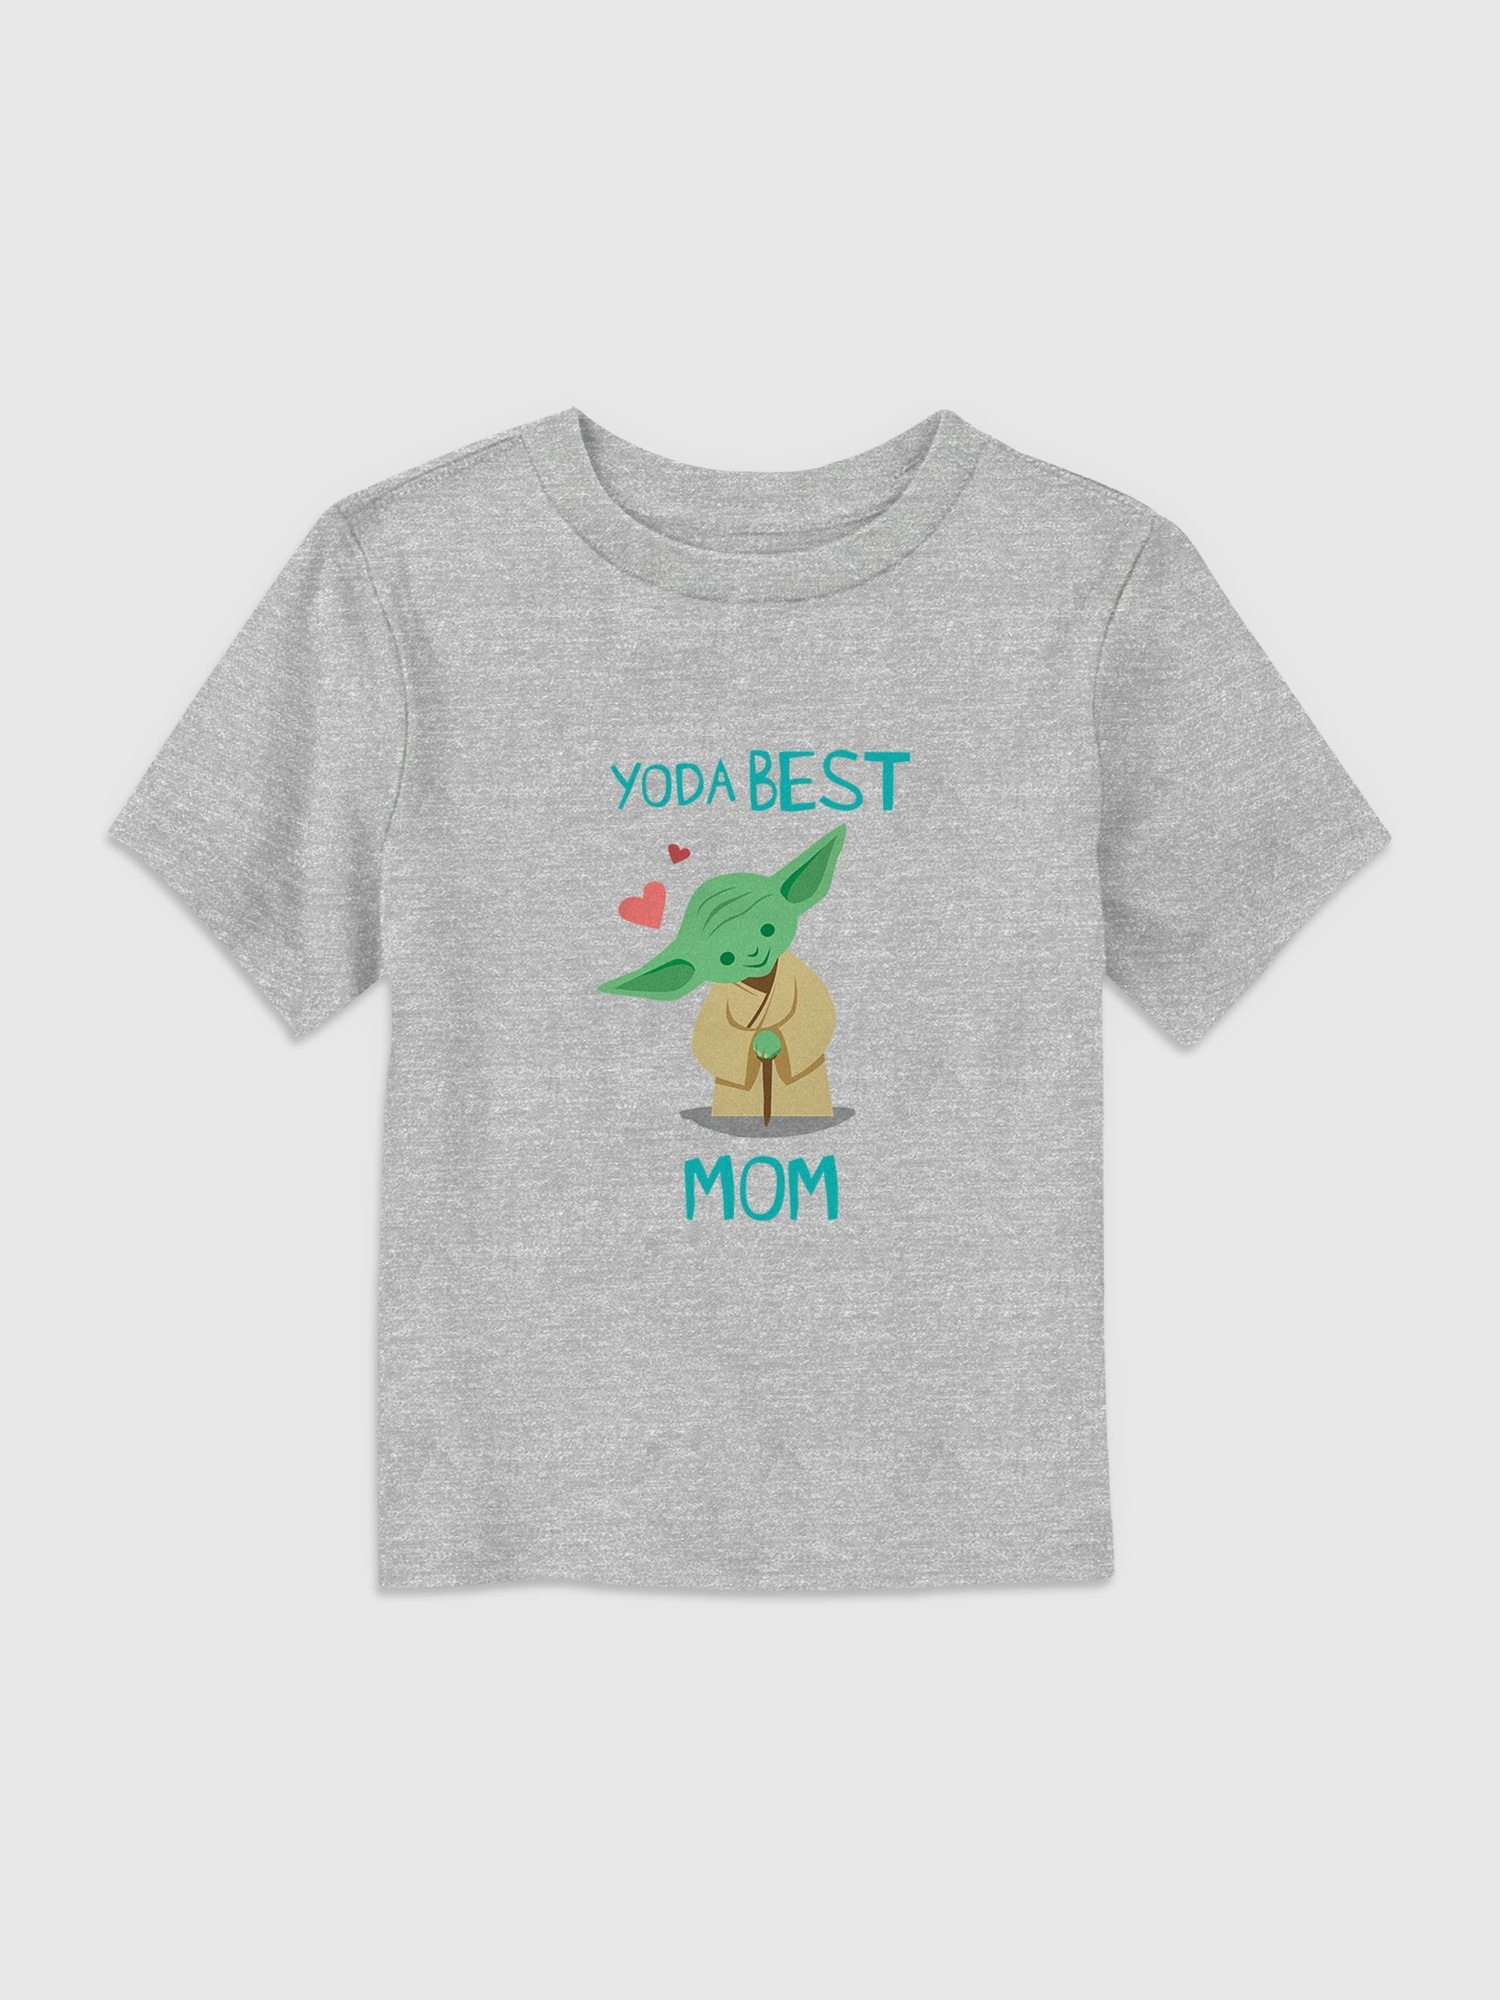 Toddler Star Wars Yoda Best Mom Graphic Tee